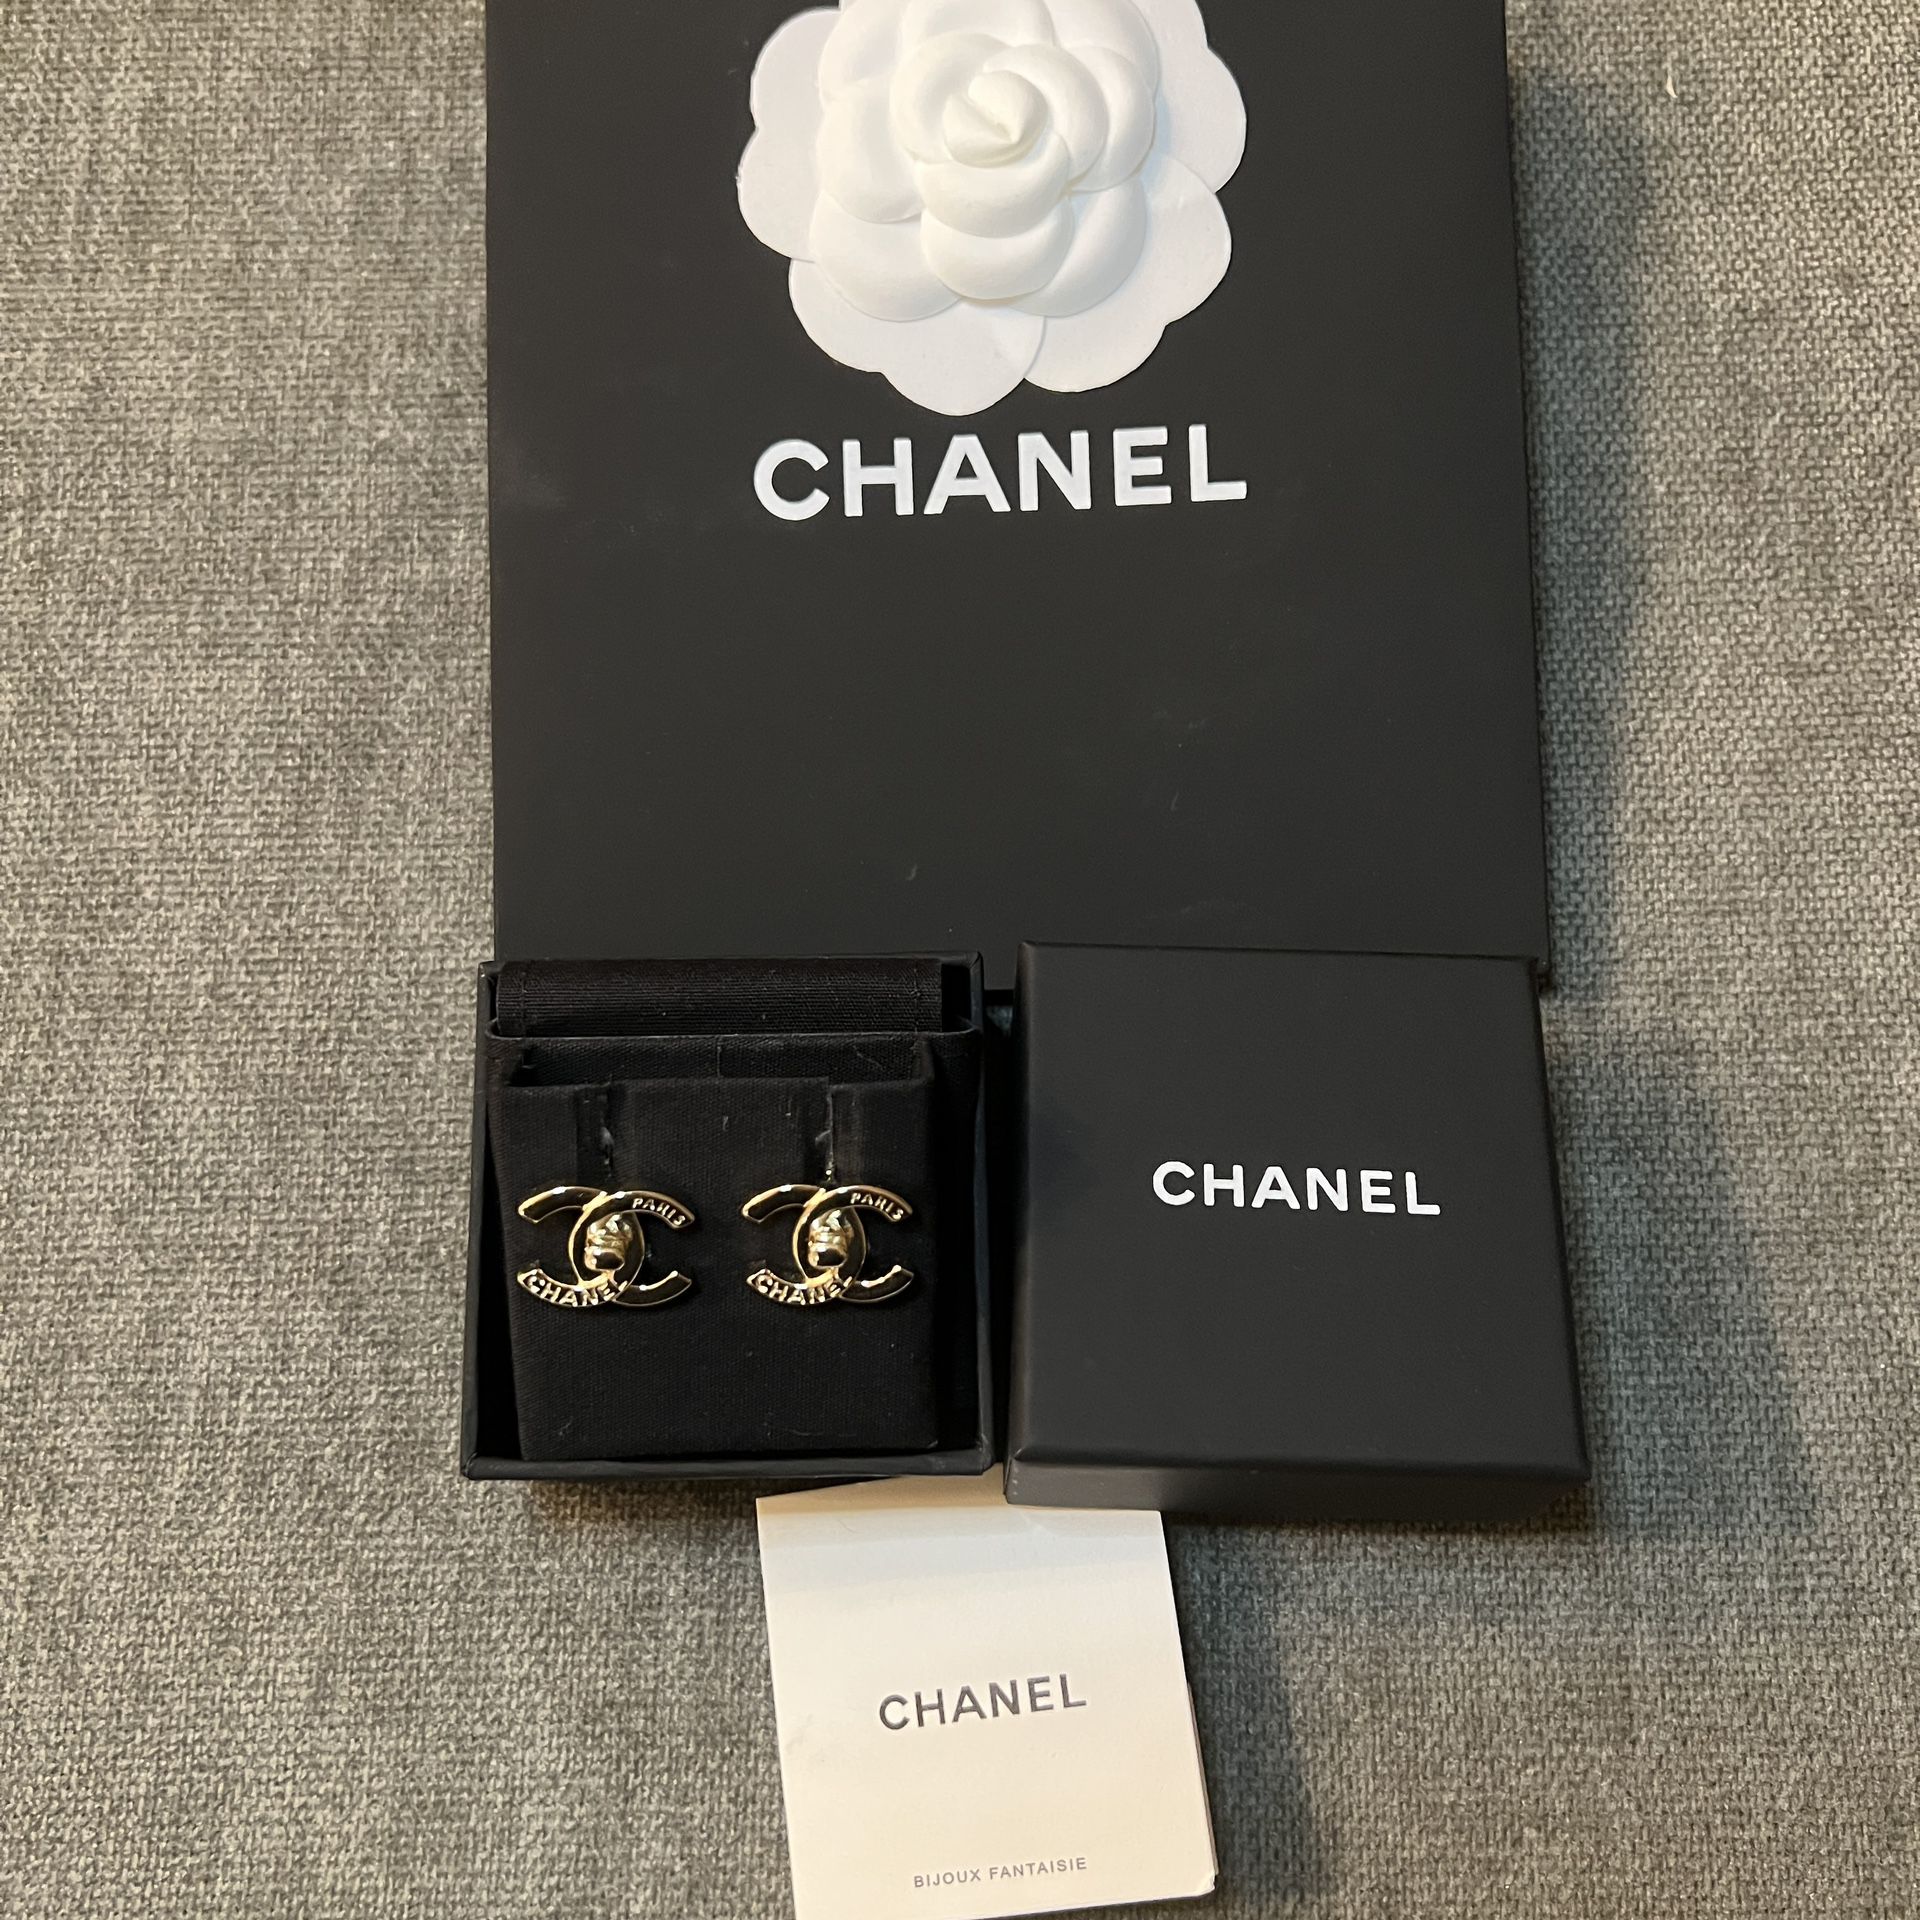 Custom Chanel Jewelry Box for Sale in Riverside, CA - OfferUp